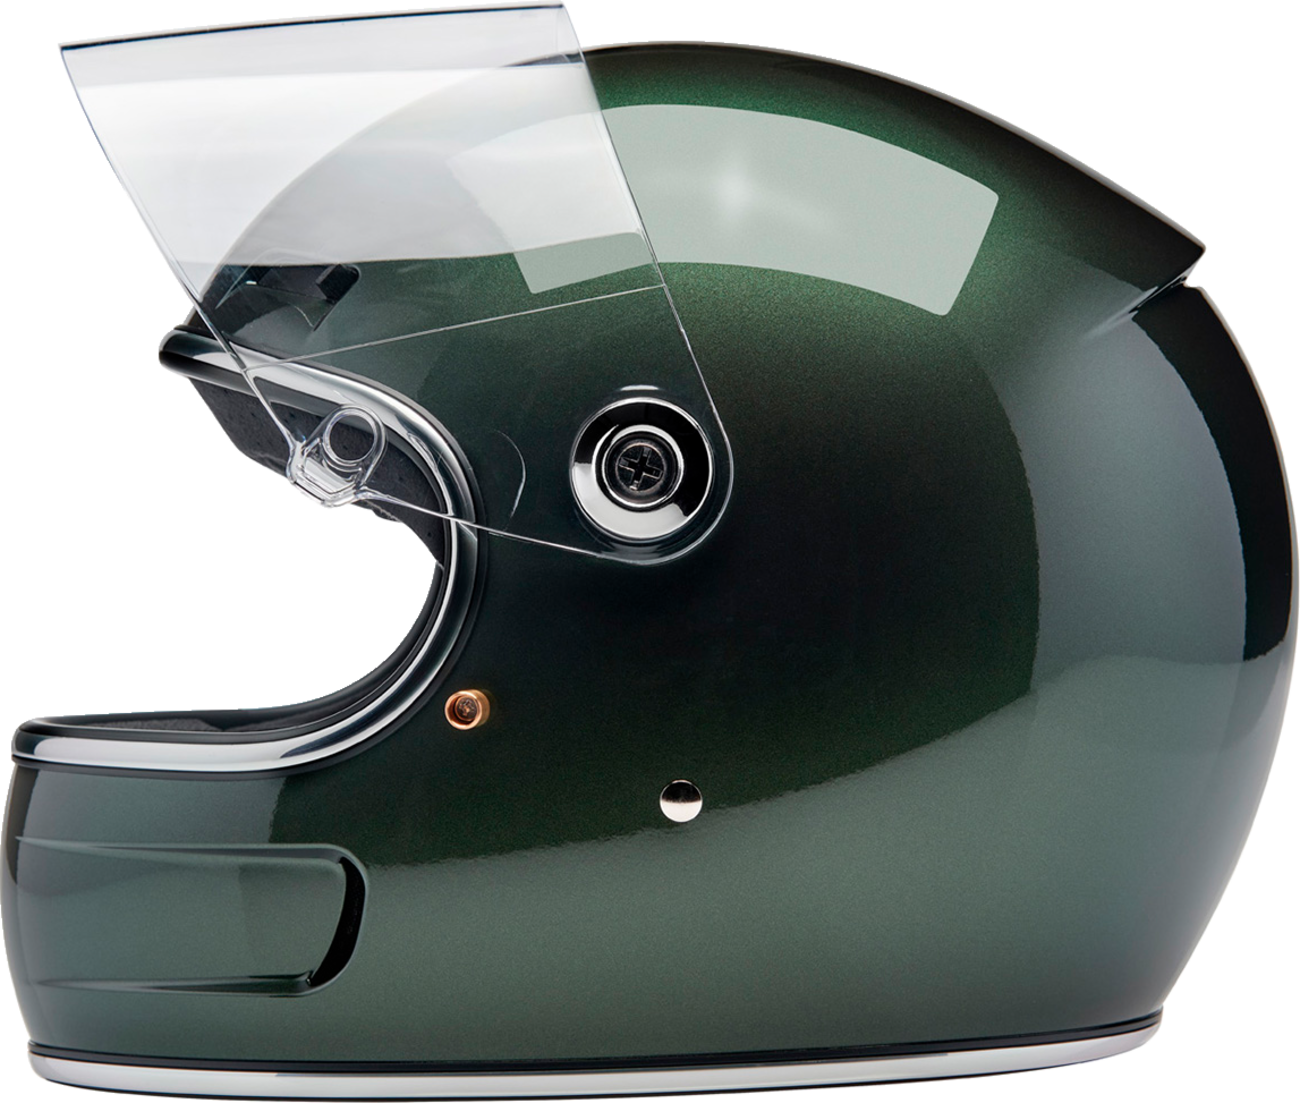 BILTWELL Gringo SV Helmet - Metallic Sierra Green - Large 1006-324-504